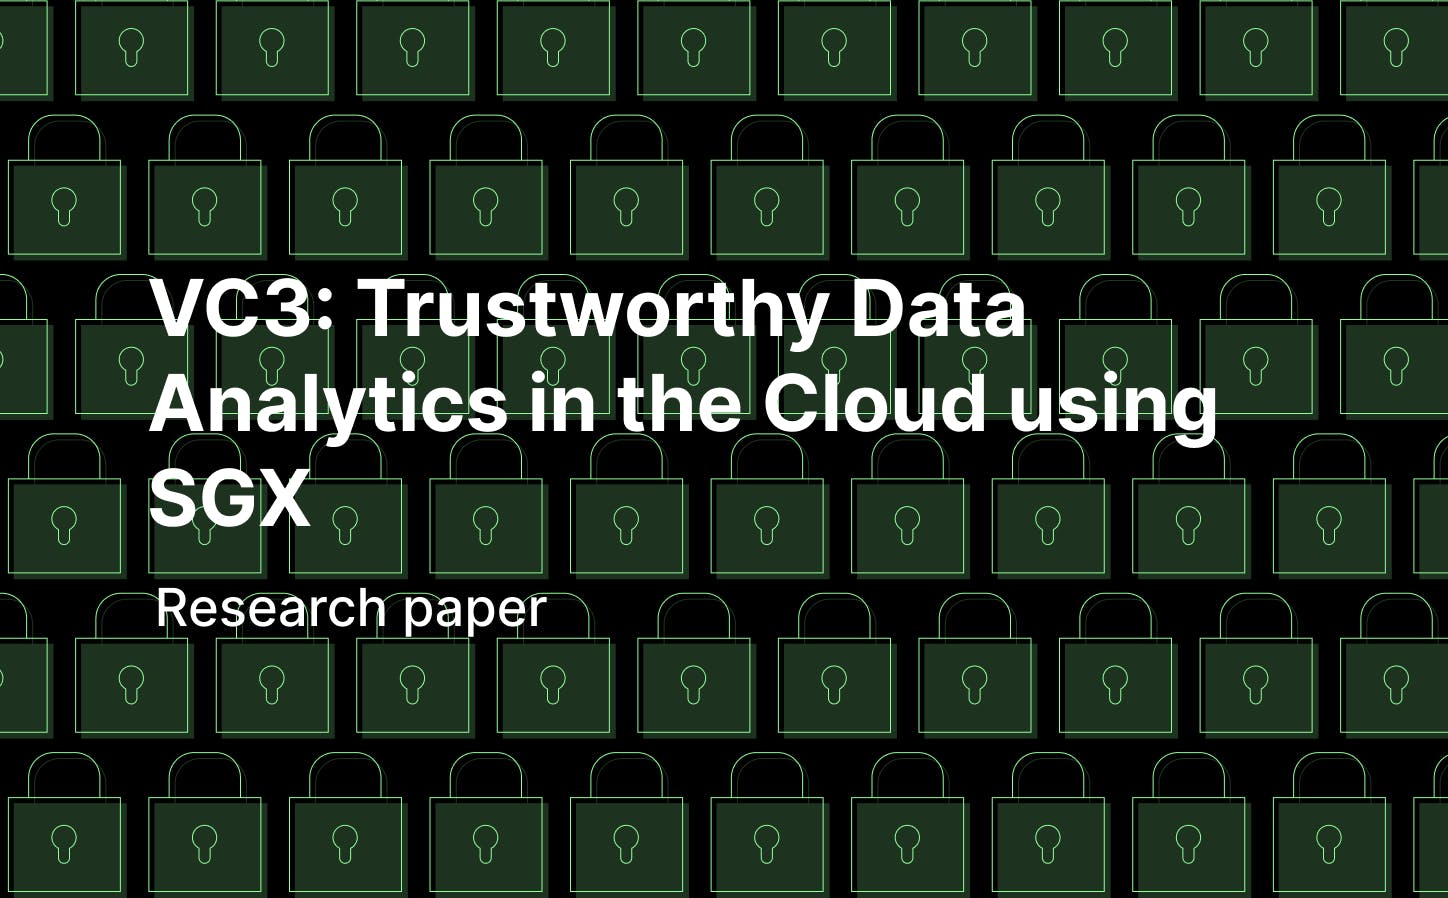 VC3: Trustworthy data analytics in the cloud using SGX